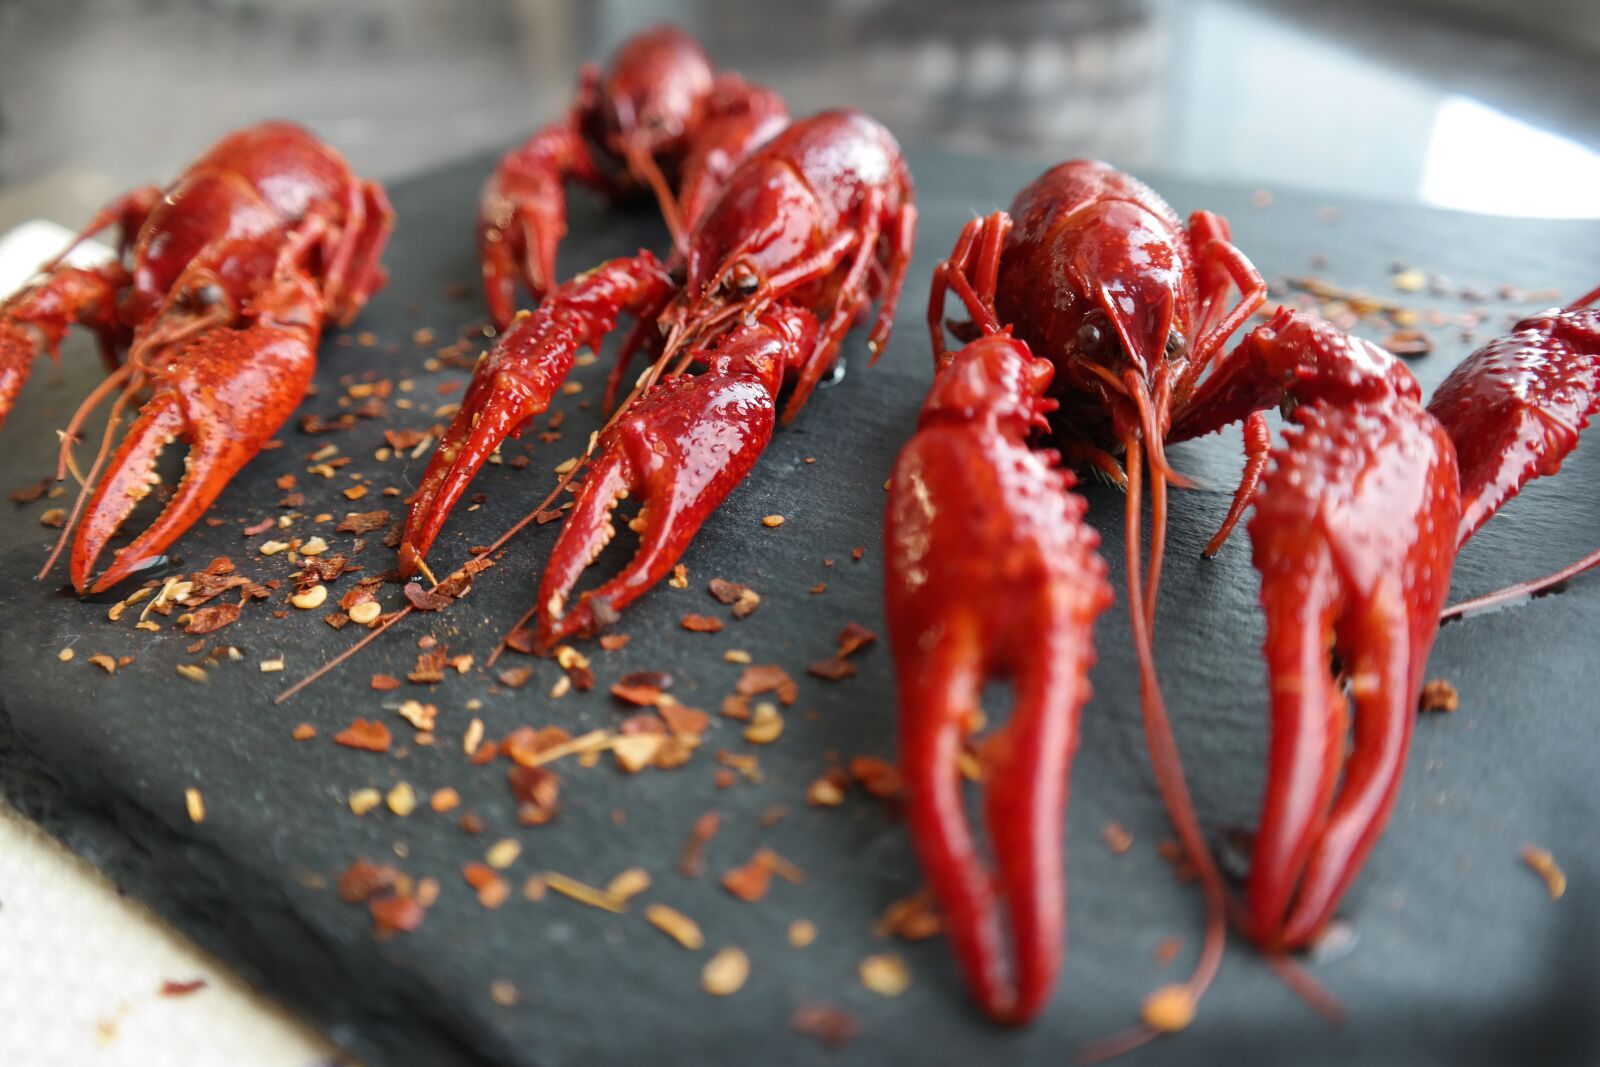 Samsung NX300 sample photo. Boiled crayfish, eat, food photography